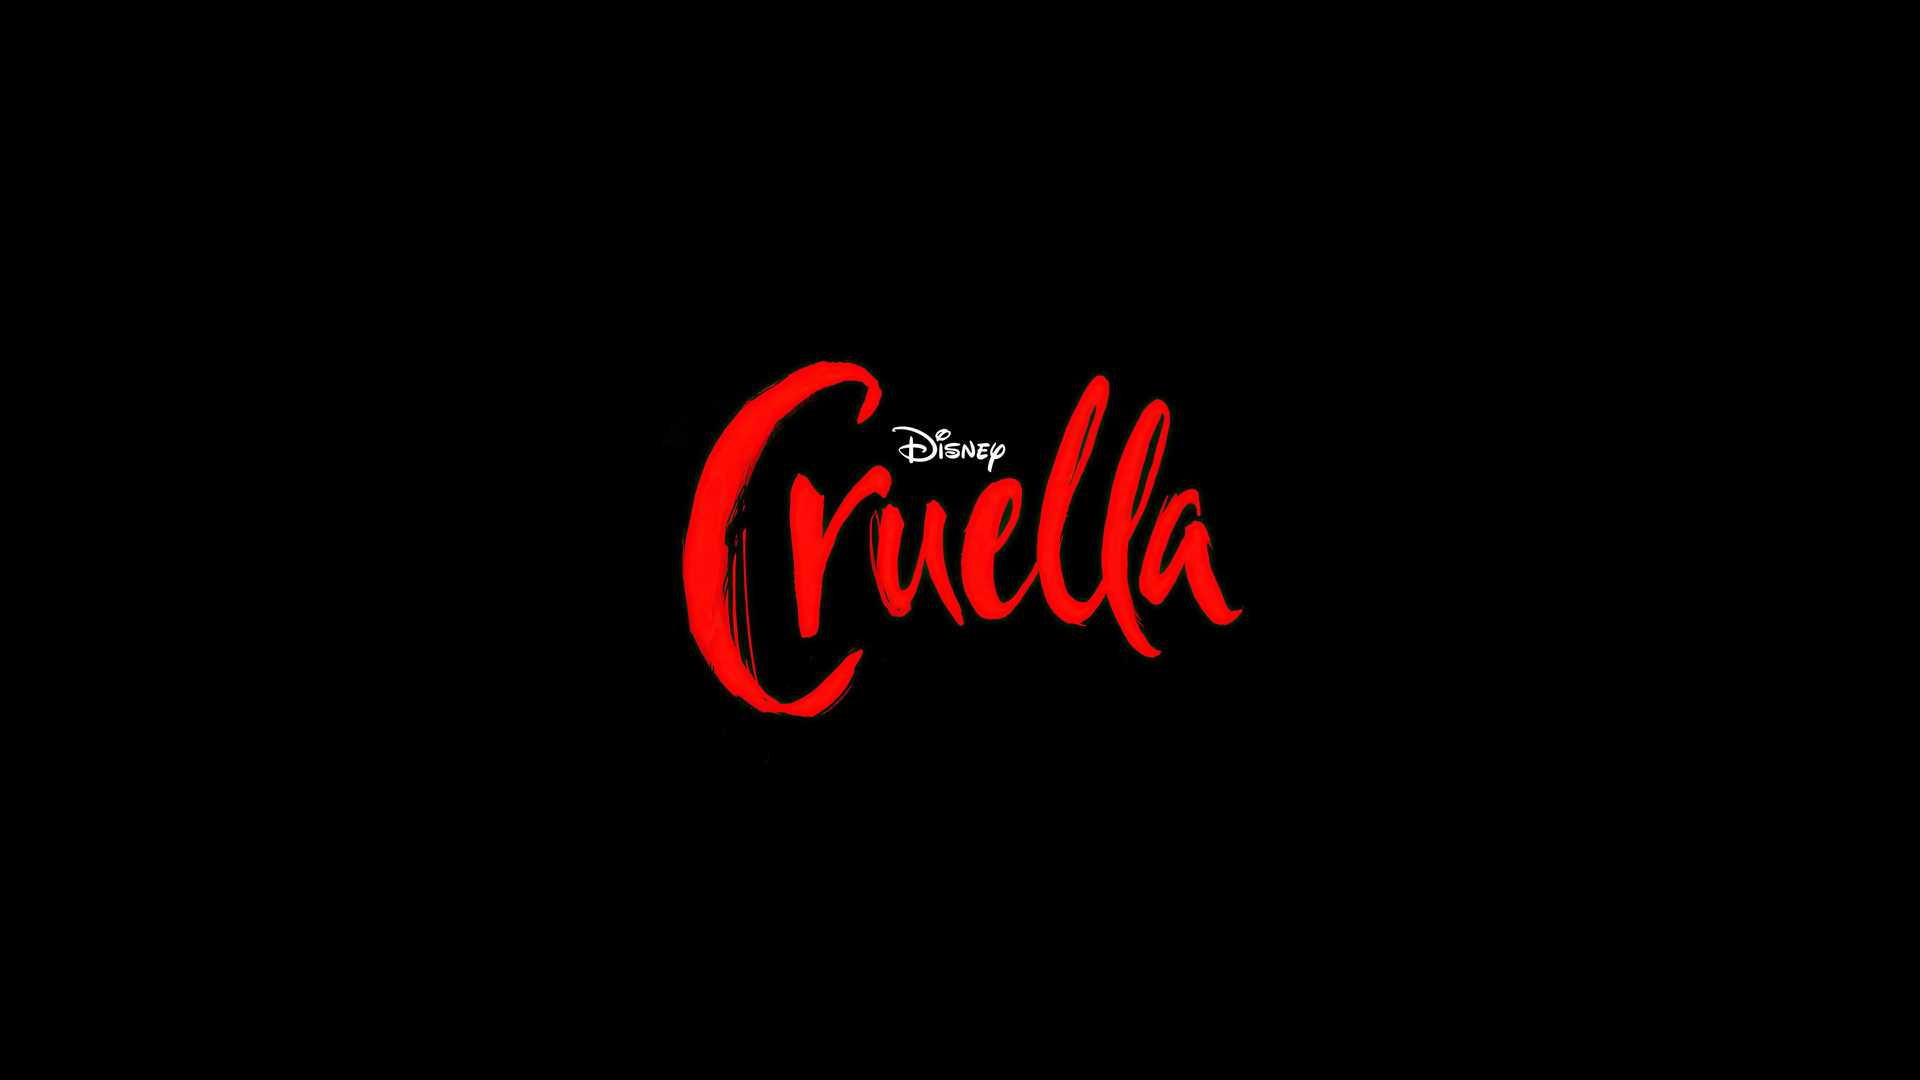 Cruella Logo Wallpaper 1